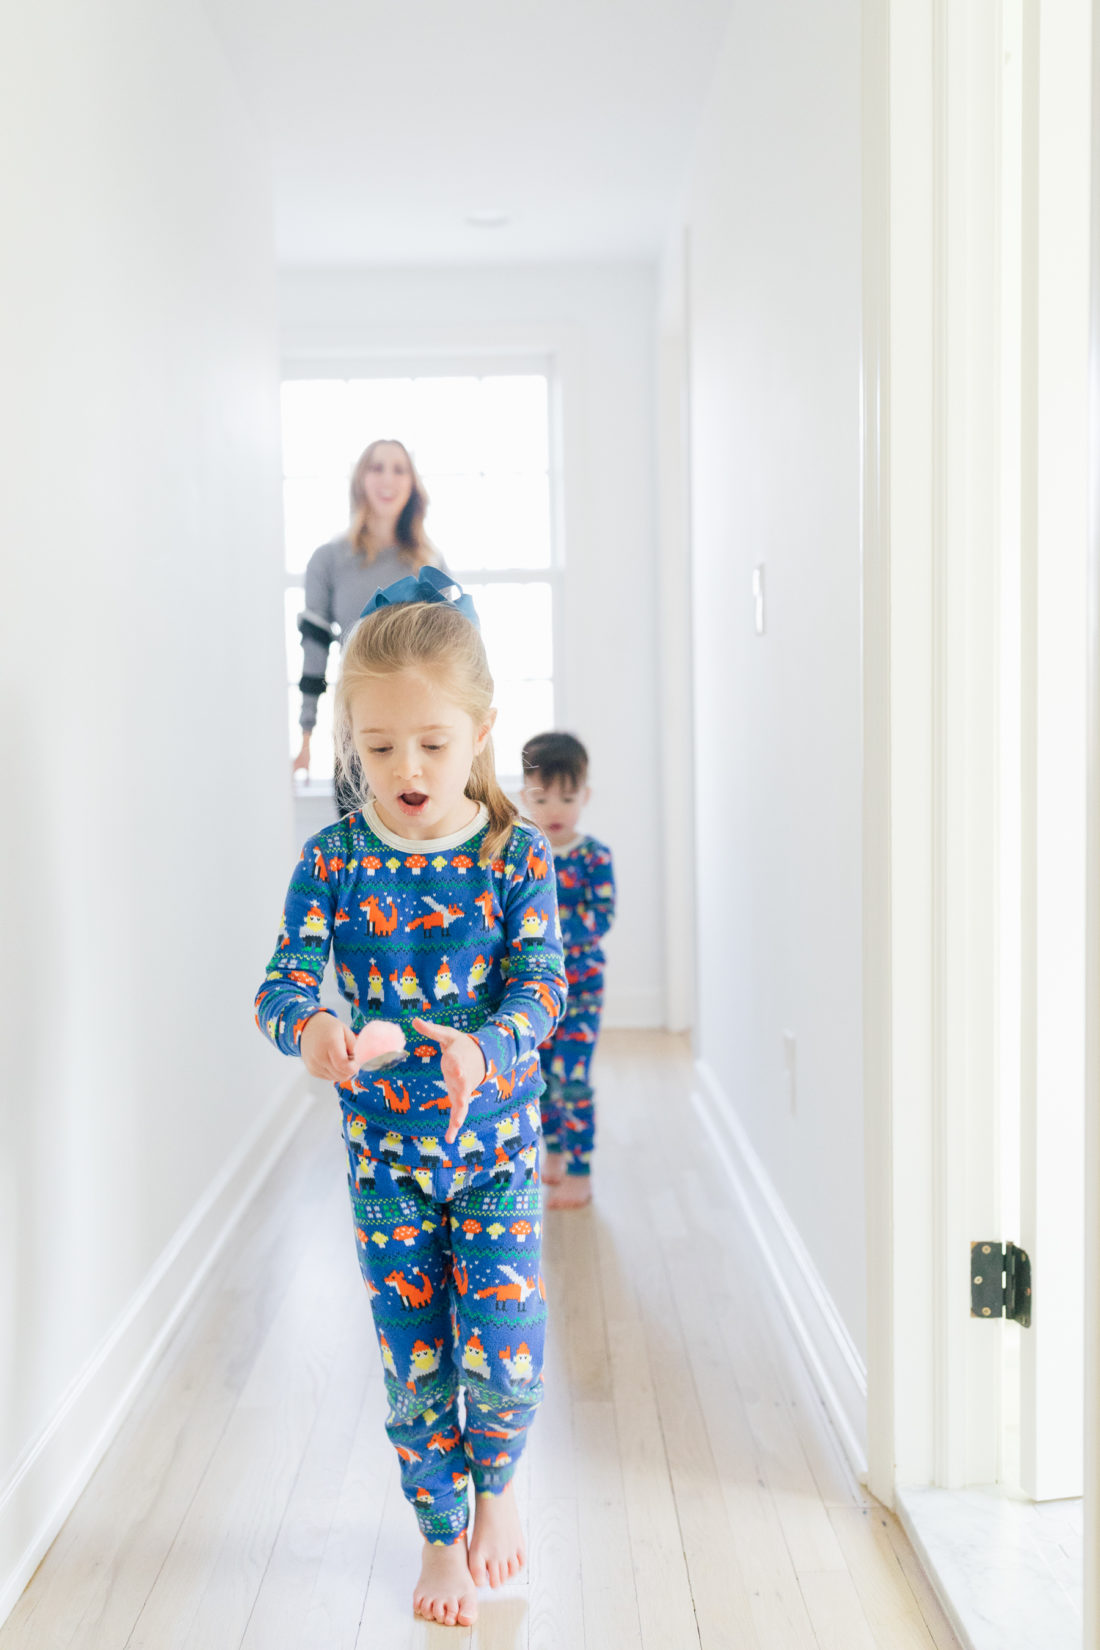 Eva Amurri Martino's children Major and Marlowe wears printed pajamas while entertaining themself at home